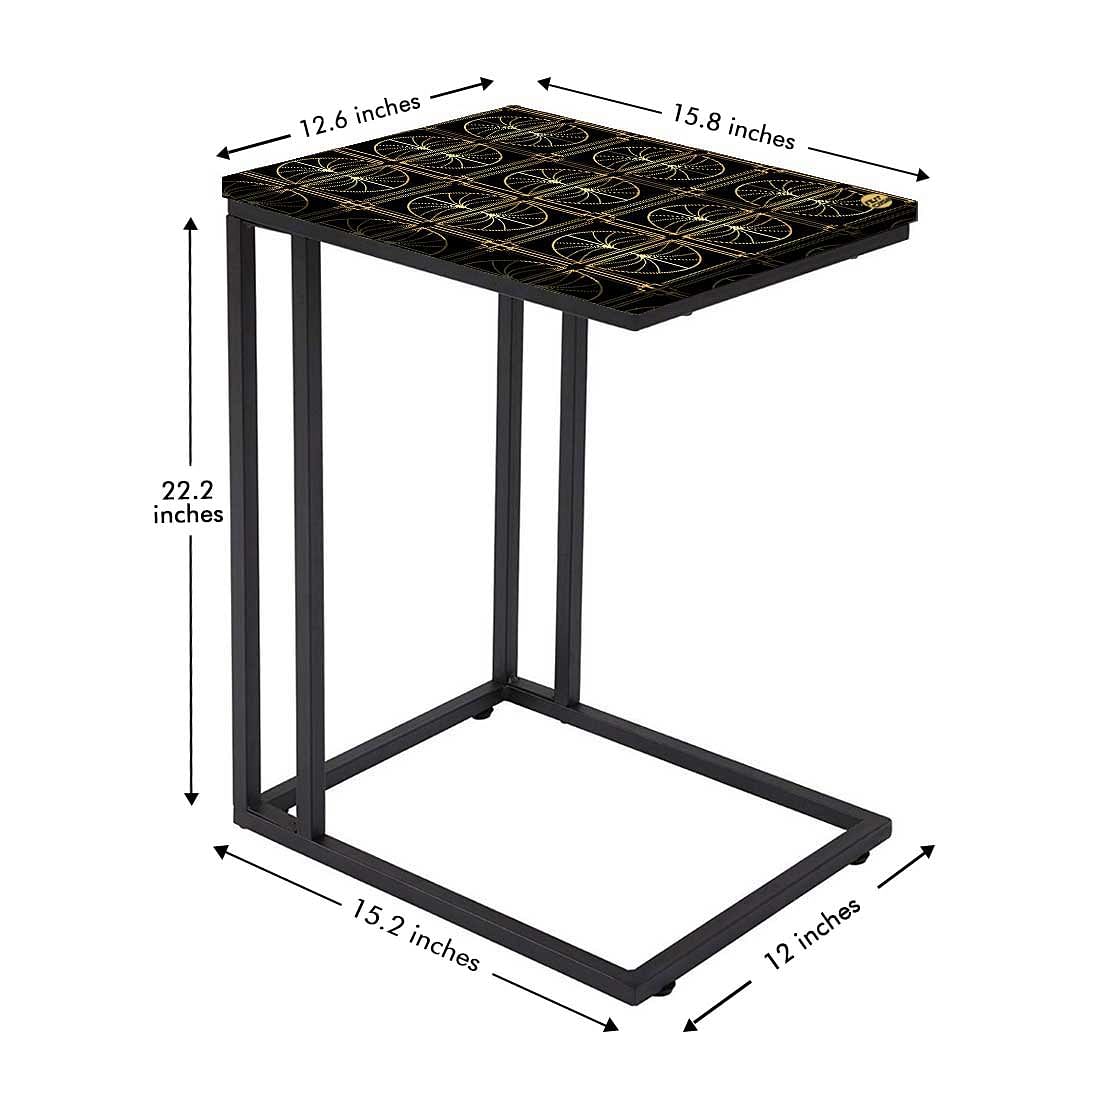 Black C Shaped End Table Serving Tables for Living Room - Palms Nutcase